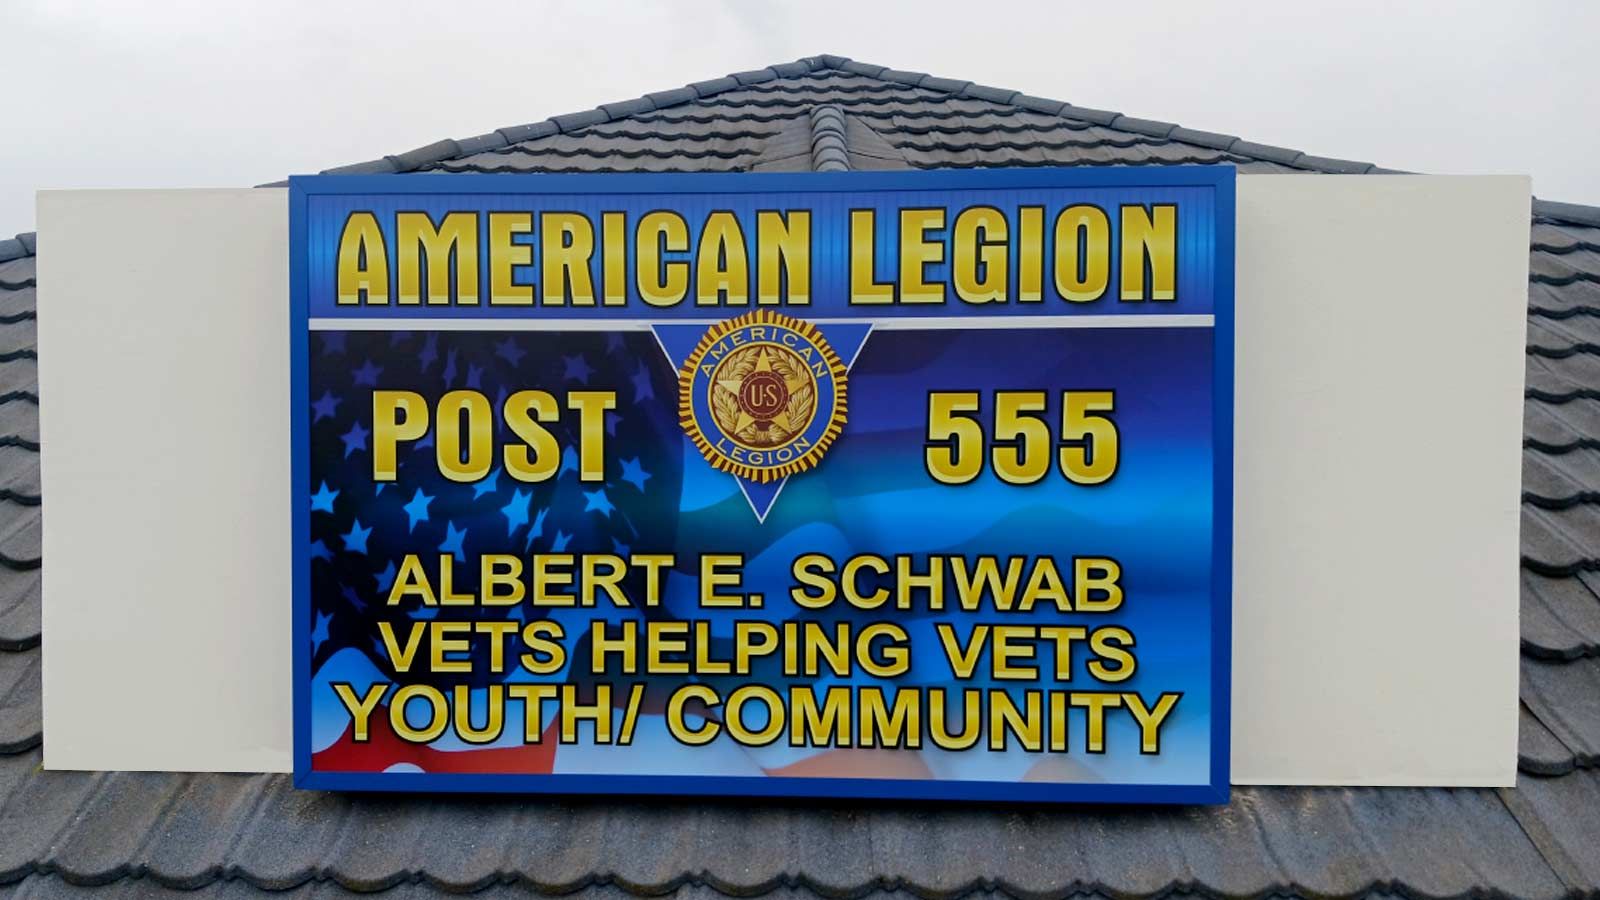 American Legion building top sign